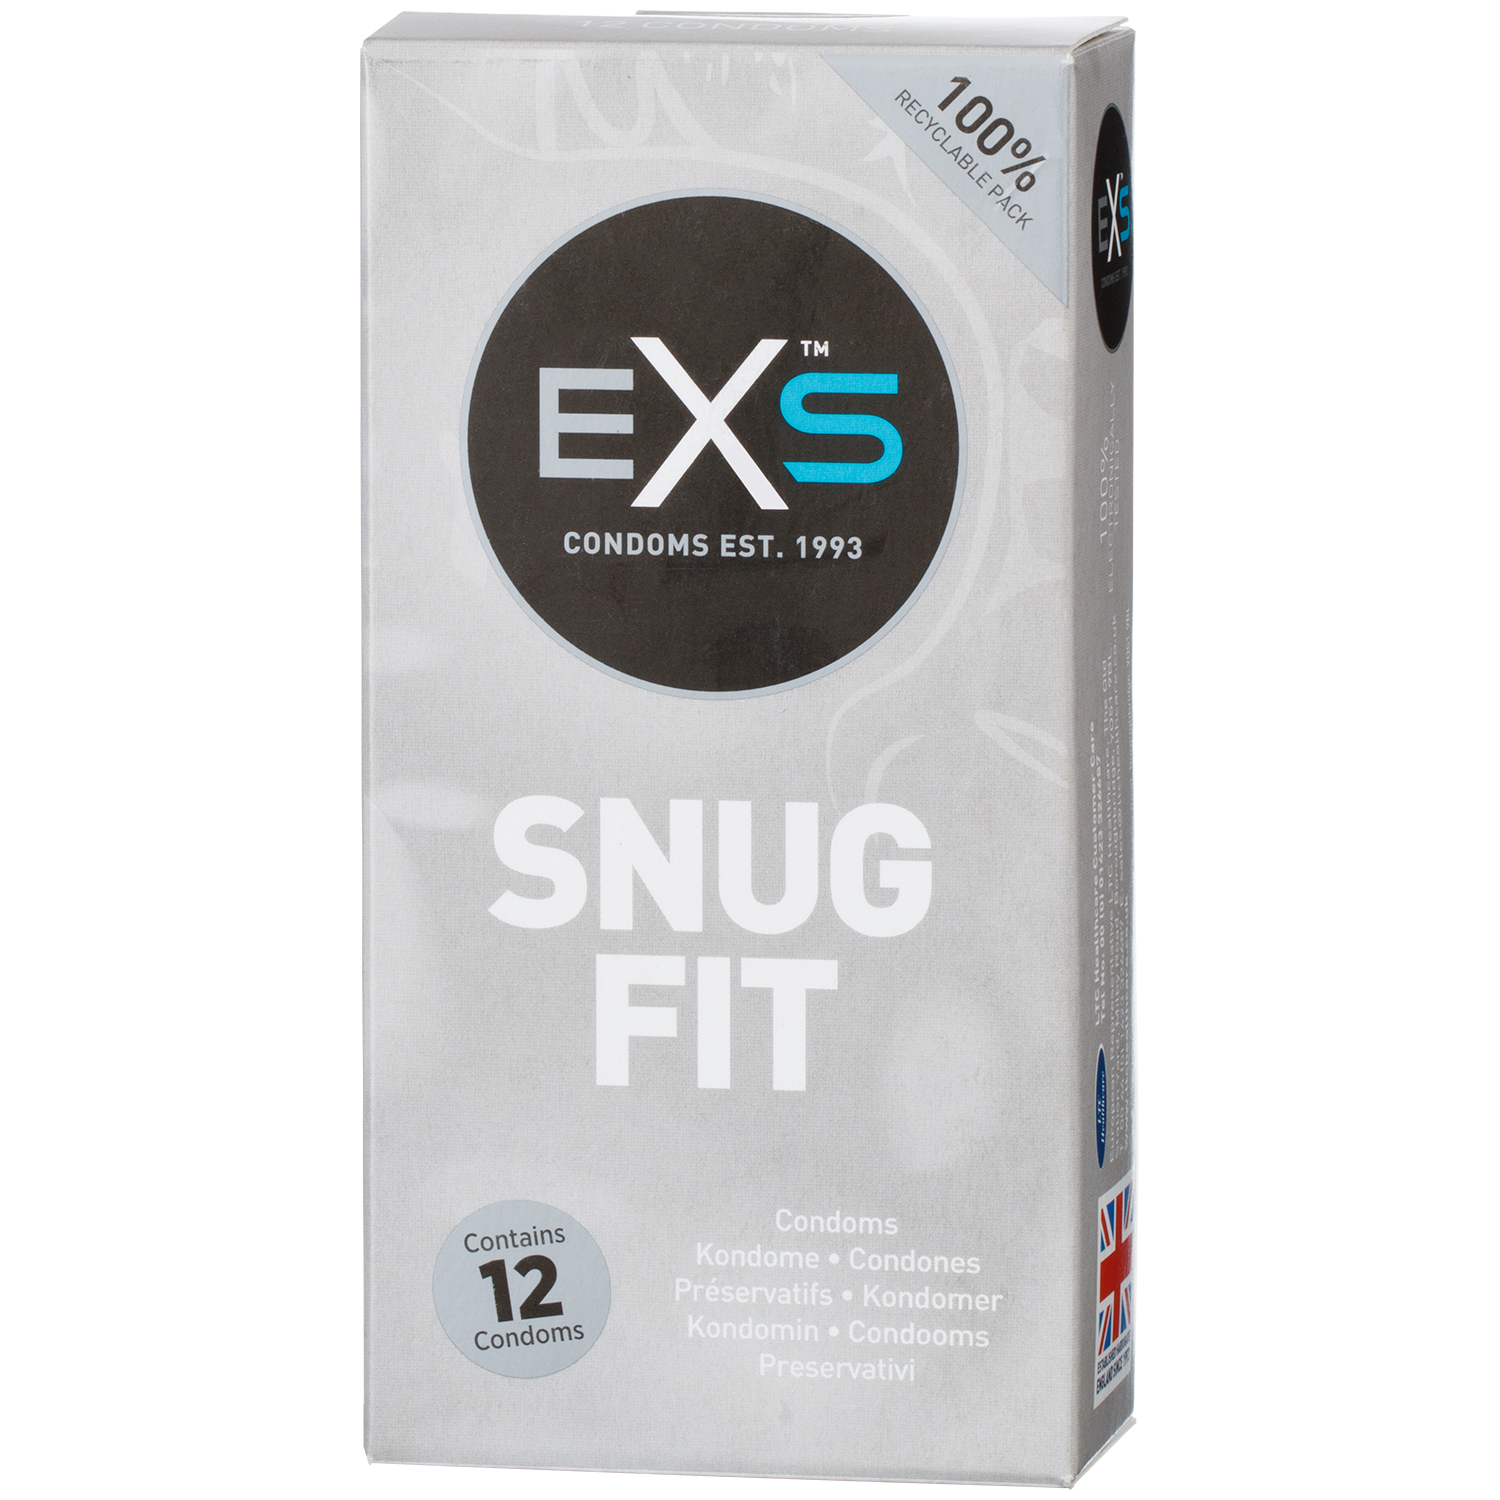 EXS Snug Fit Kondomer 12 st   - Klar